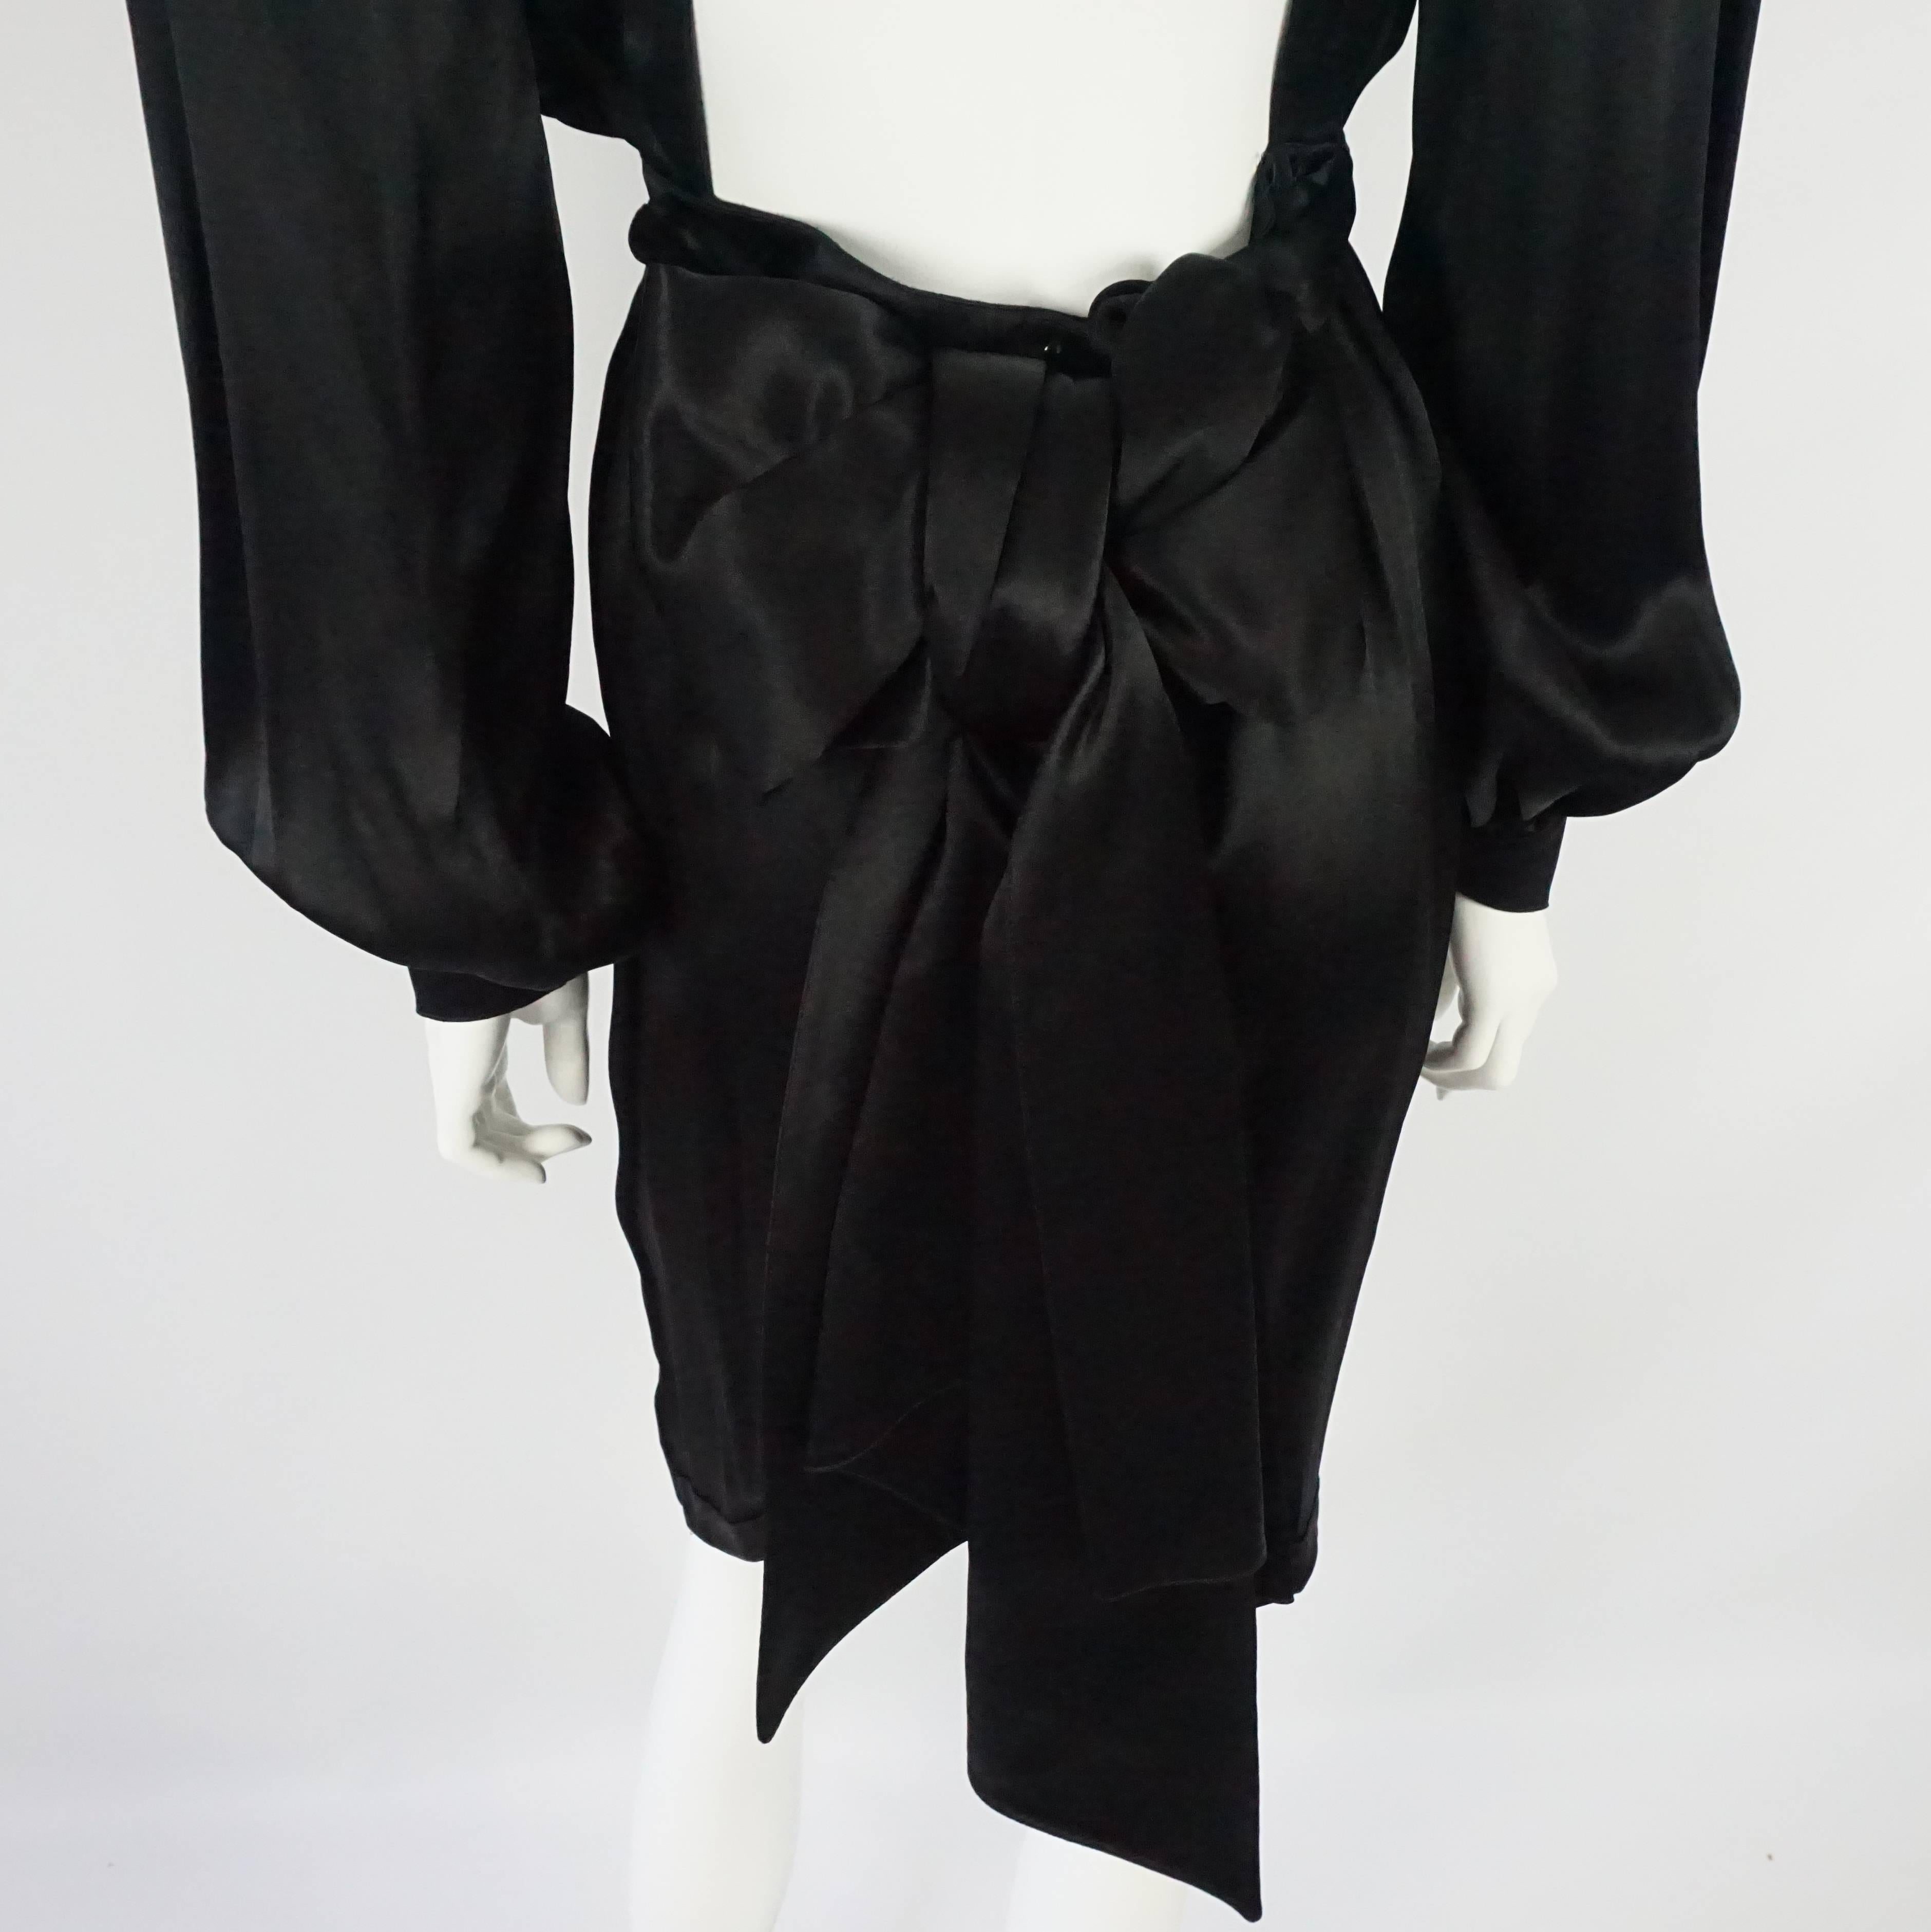 Thierry Mugler Black Satin Dress with Back Bow - 40 - Circa 1980s 1